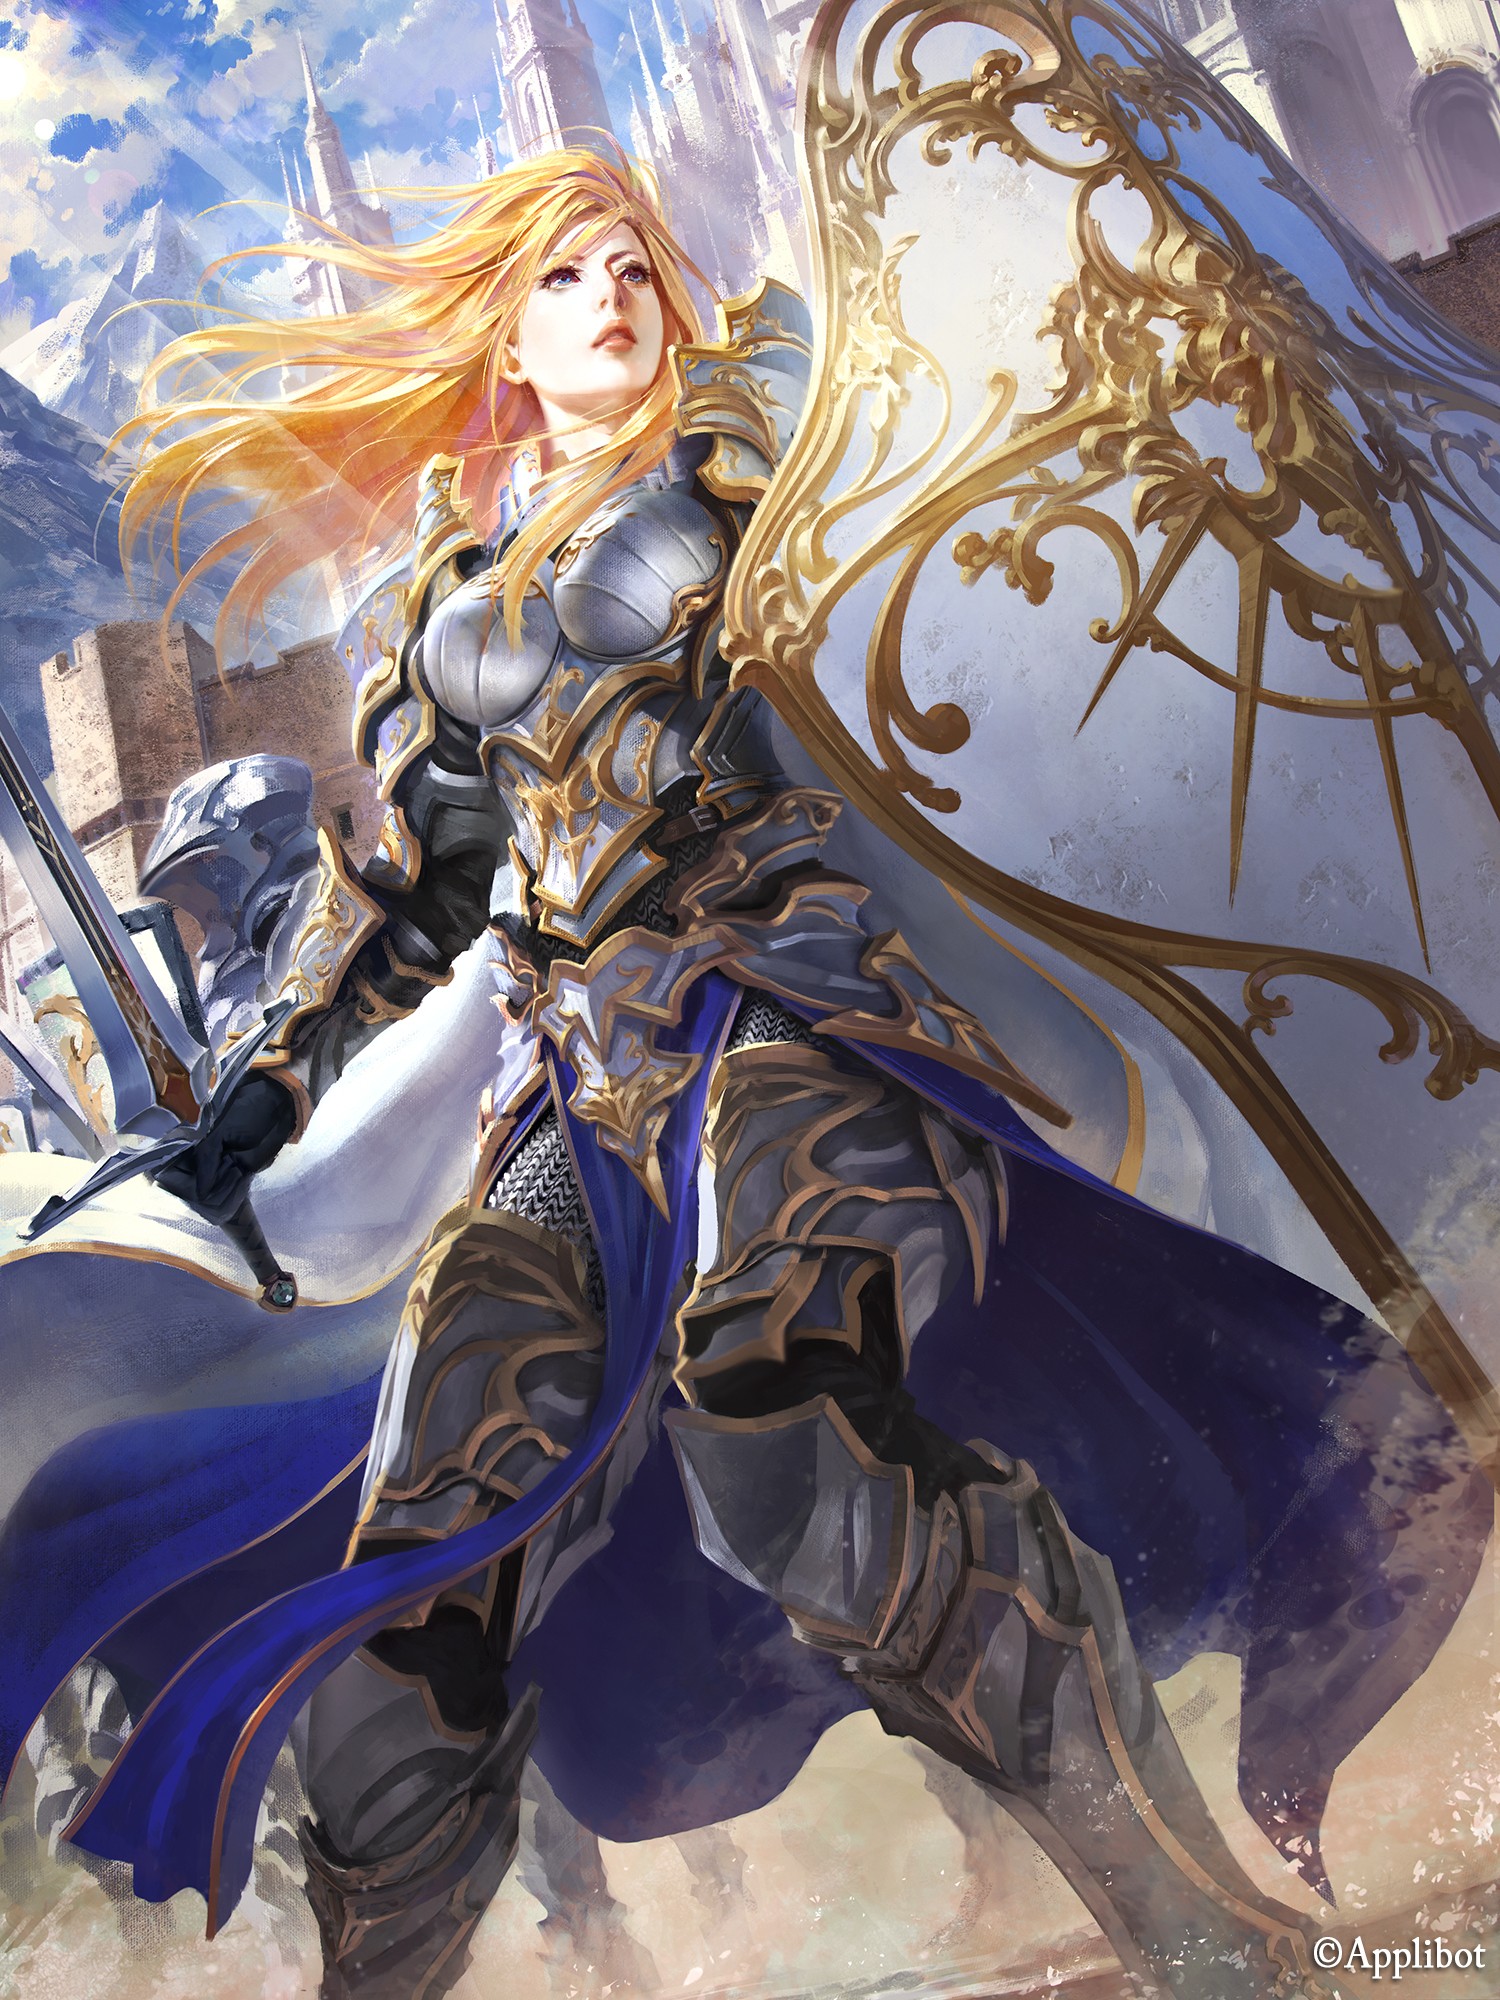 Anime 1500x2000 armor sword figure-hugging armor low-angle Pixiv fantasy art fantasy girl blonde long hair fantasy armor shield women